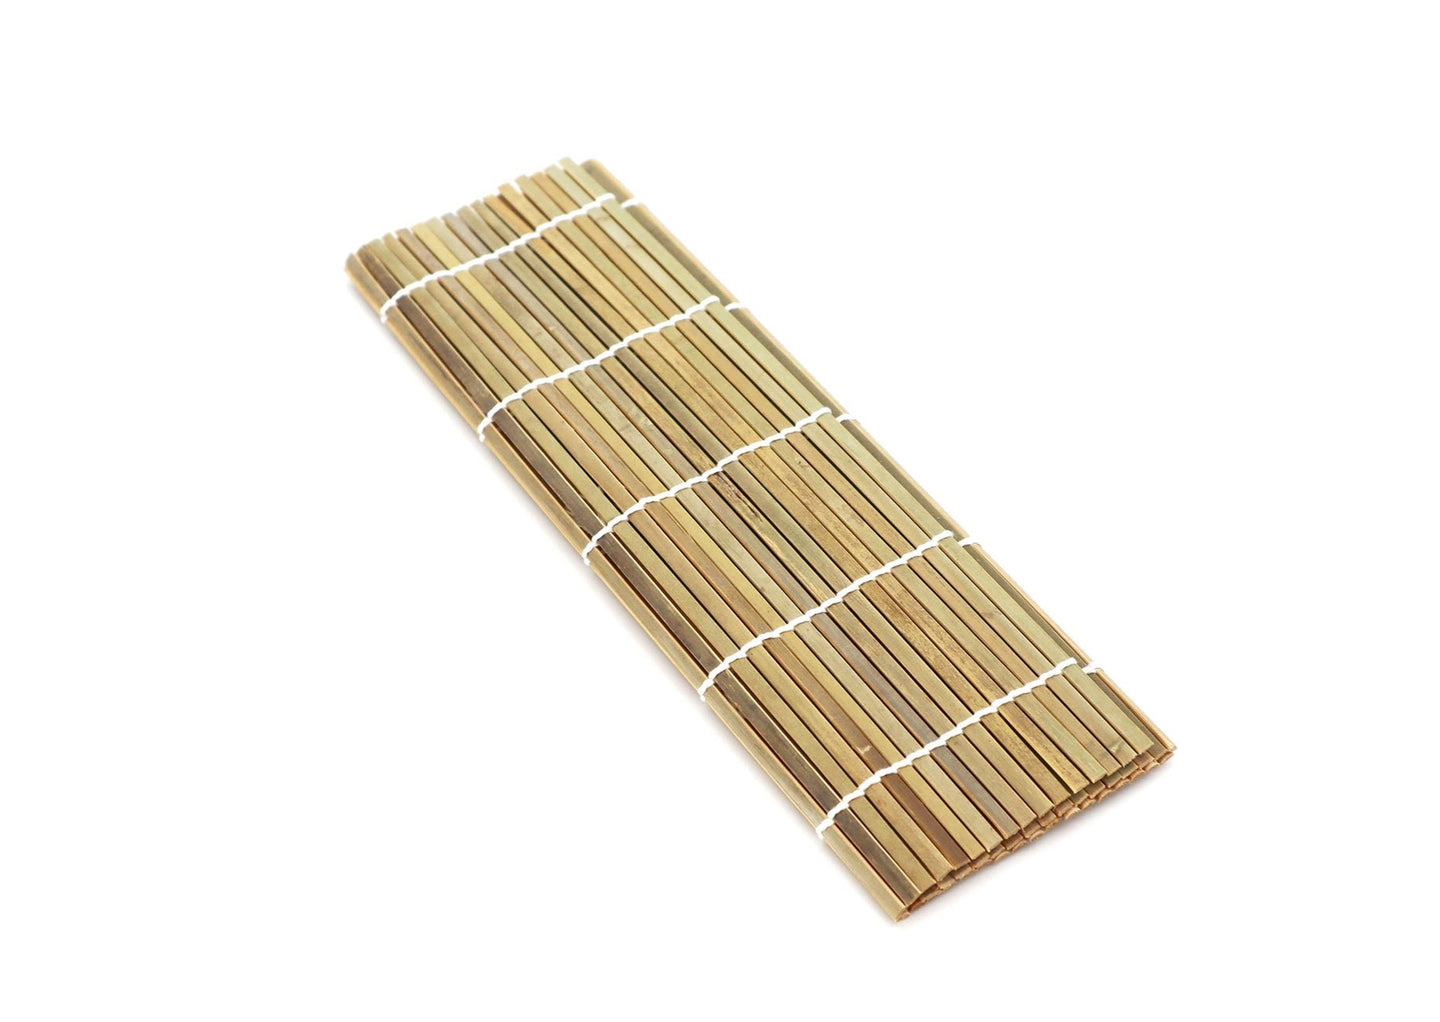 Bamboo sushi roller